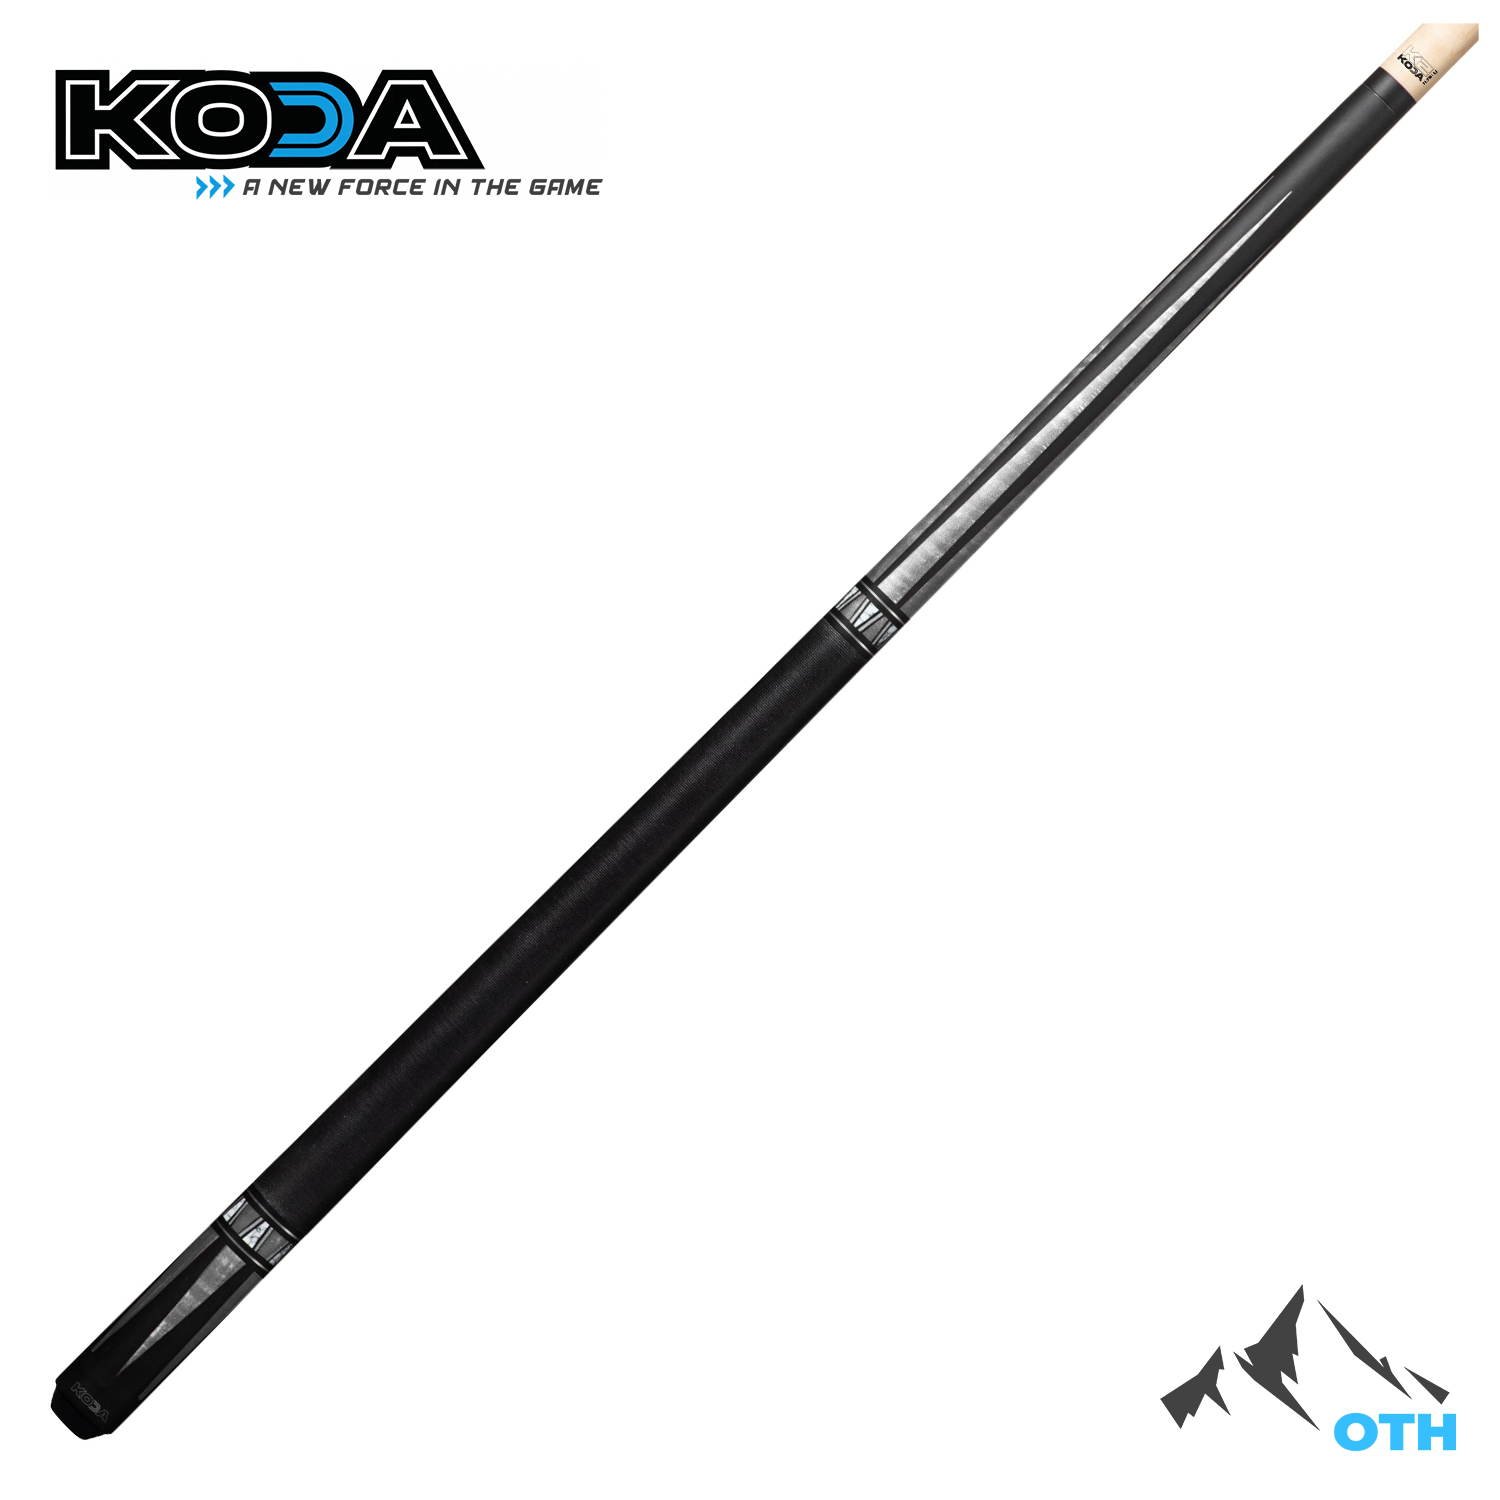 Koda K2 Series KL171